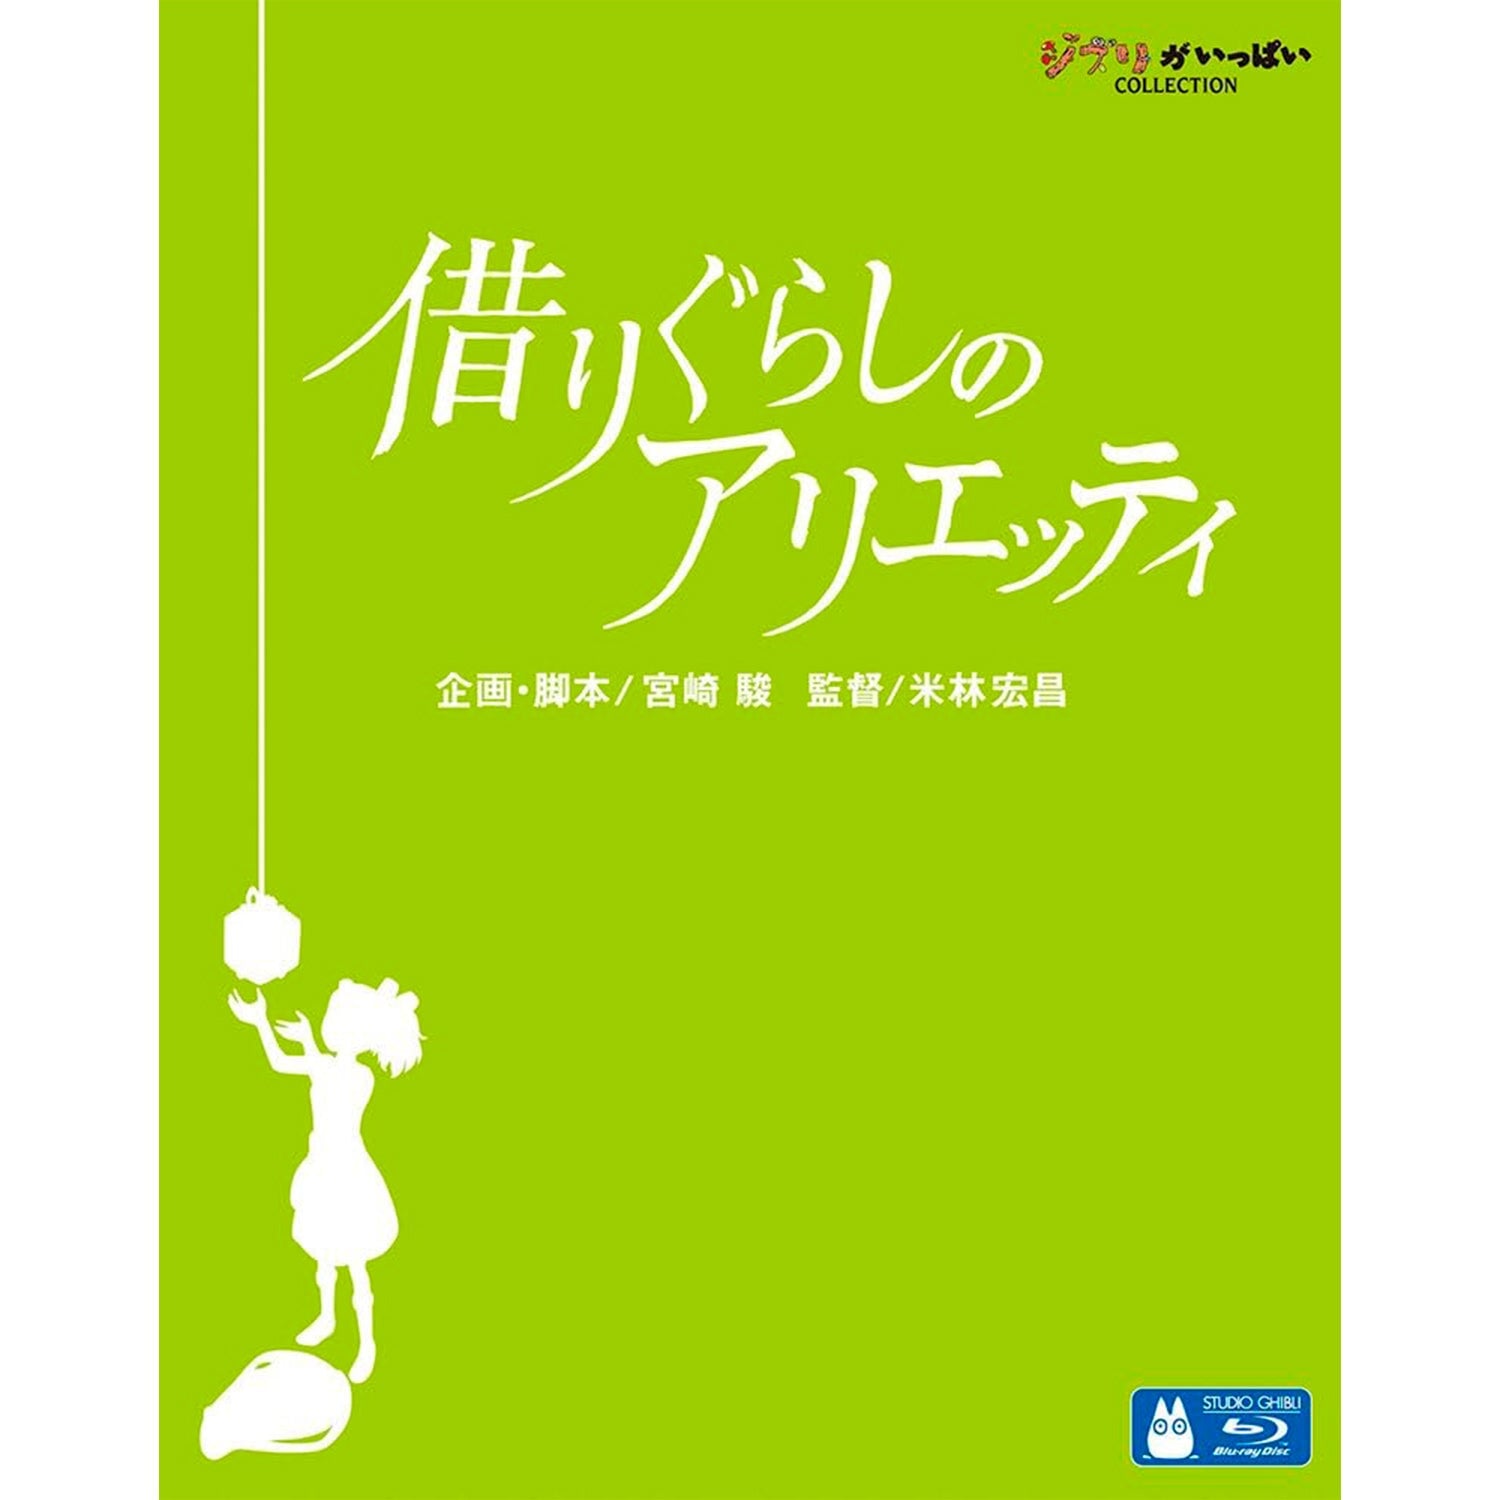 The Borrower Arrietty (2010) (англ. язык) (Blu-ray) DigiPack